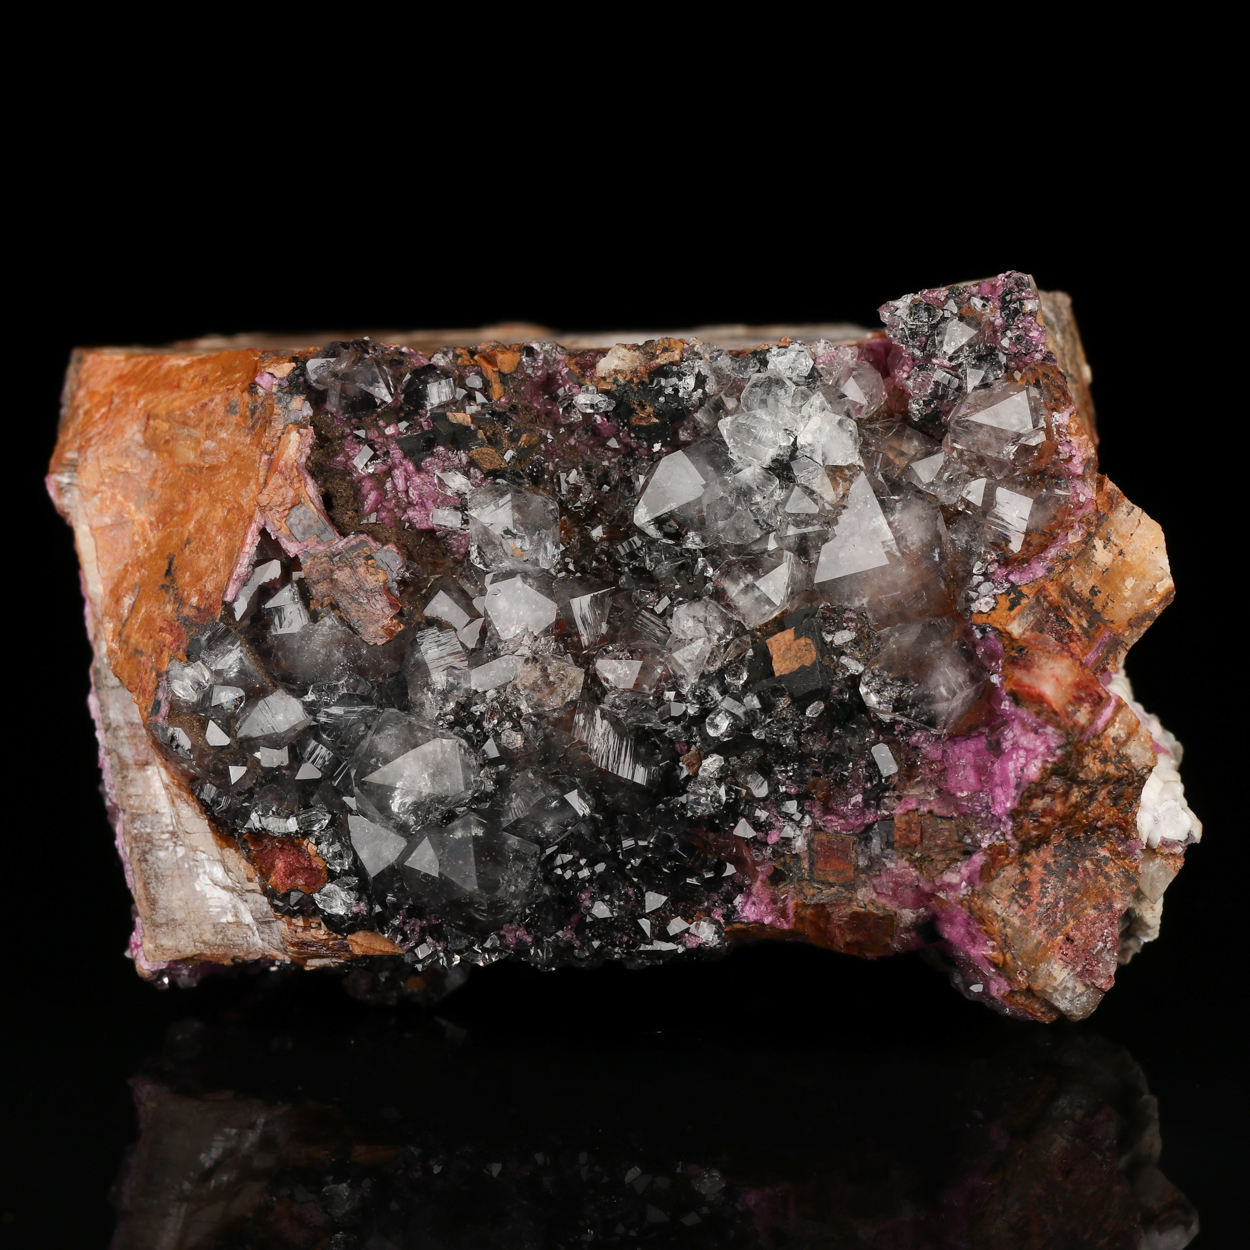 Cobaltoan Calcite On Calcite With Quartz